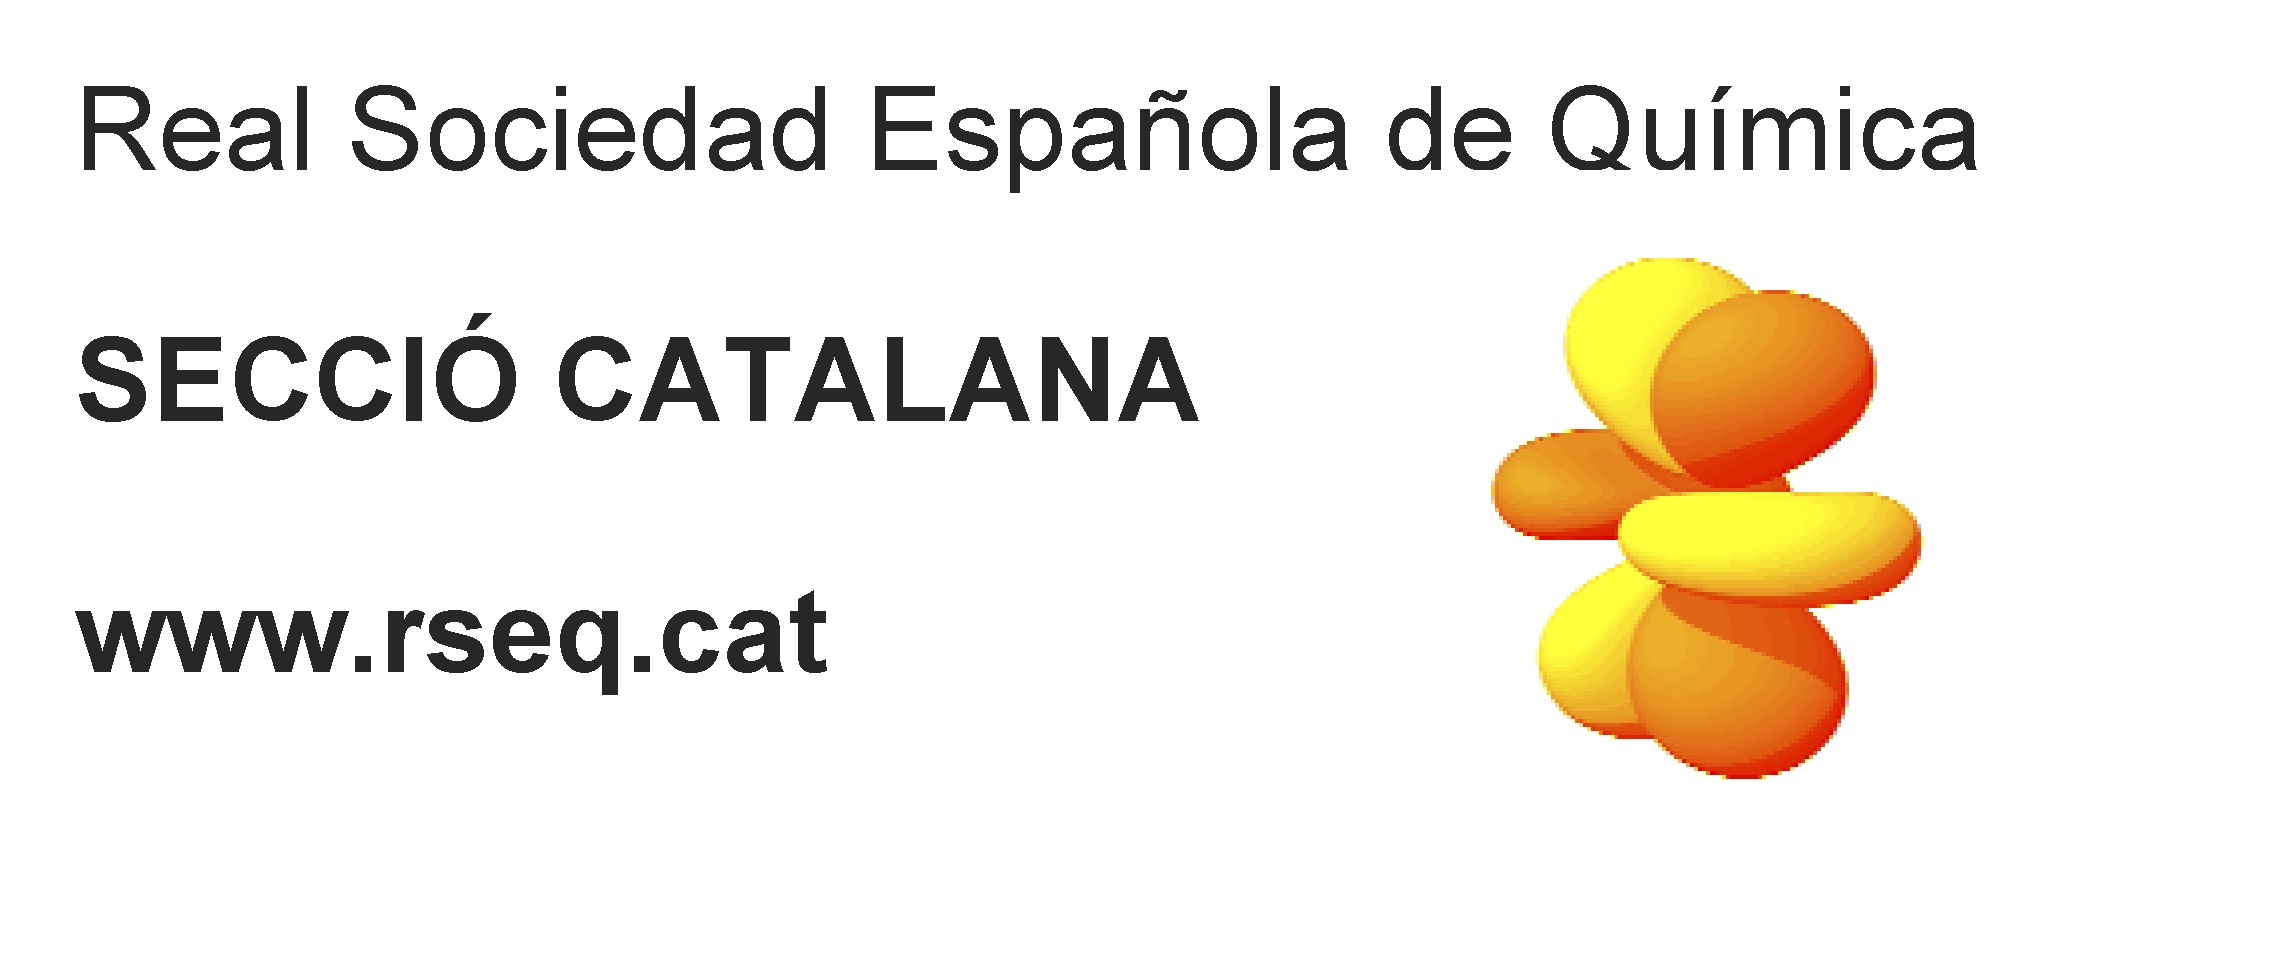 Catalan section of the Real Sociedad Española de Química (RSEQ-CAT)